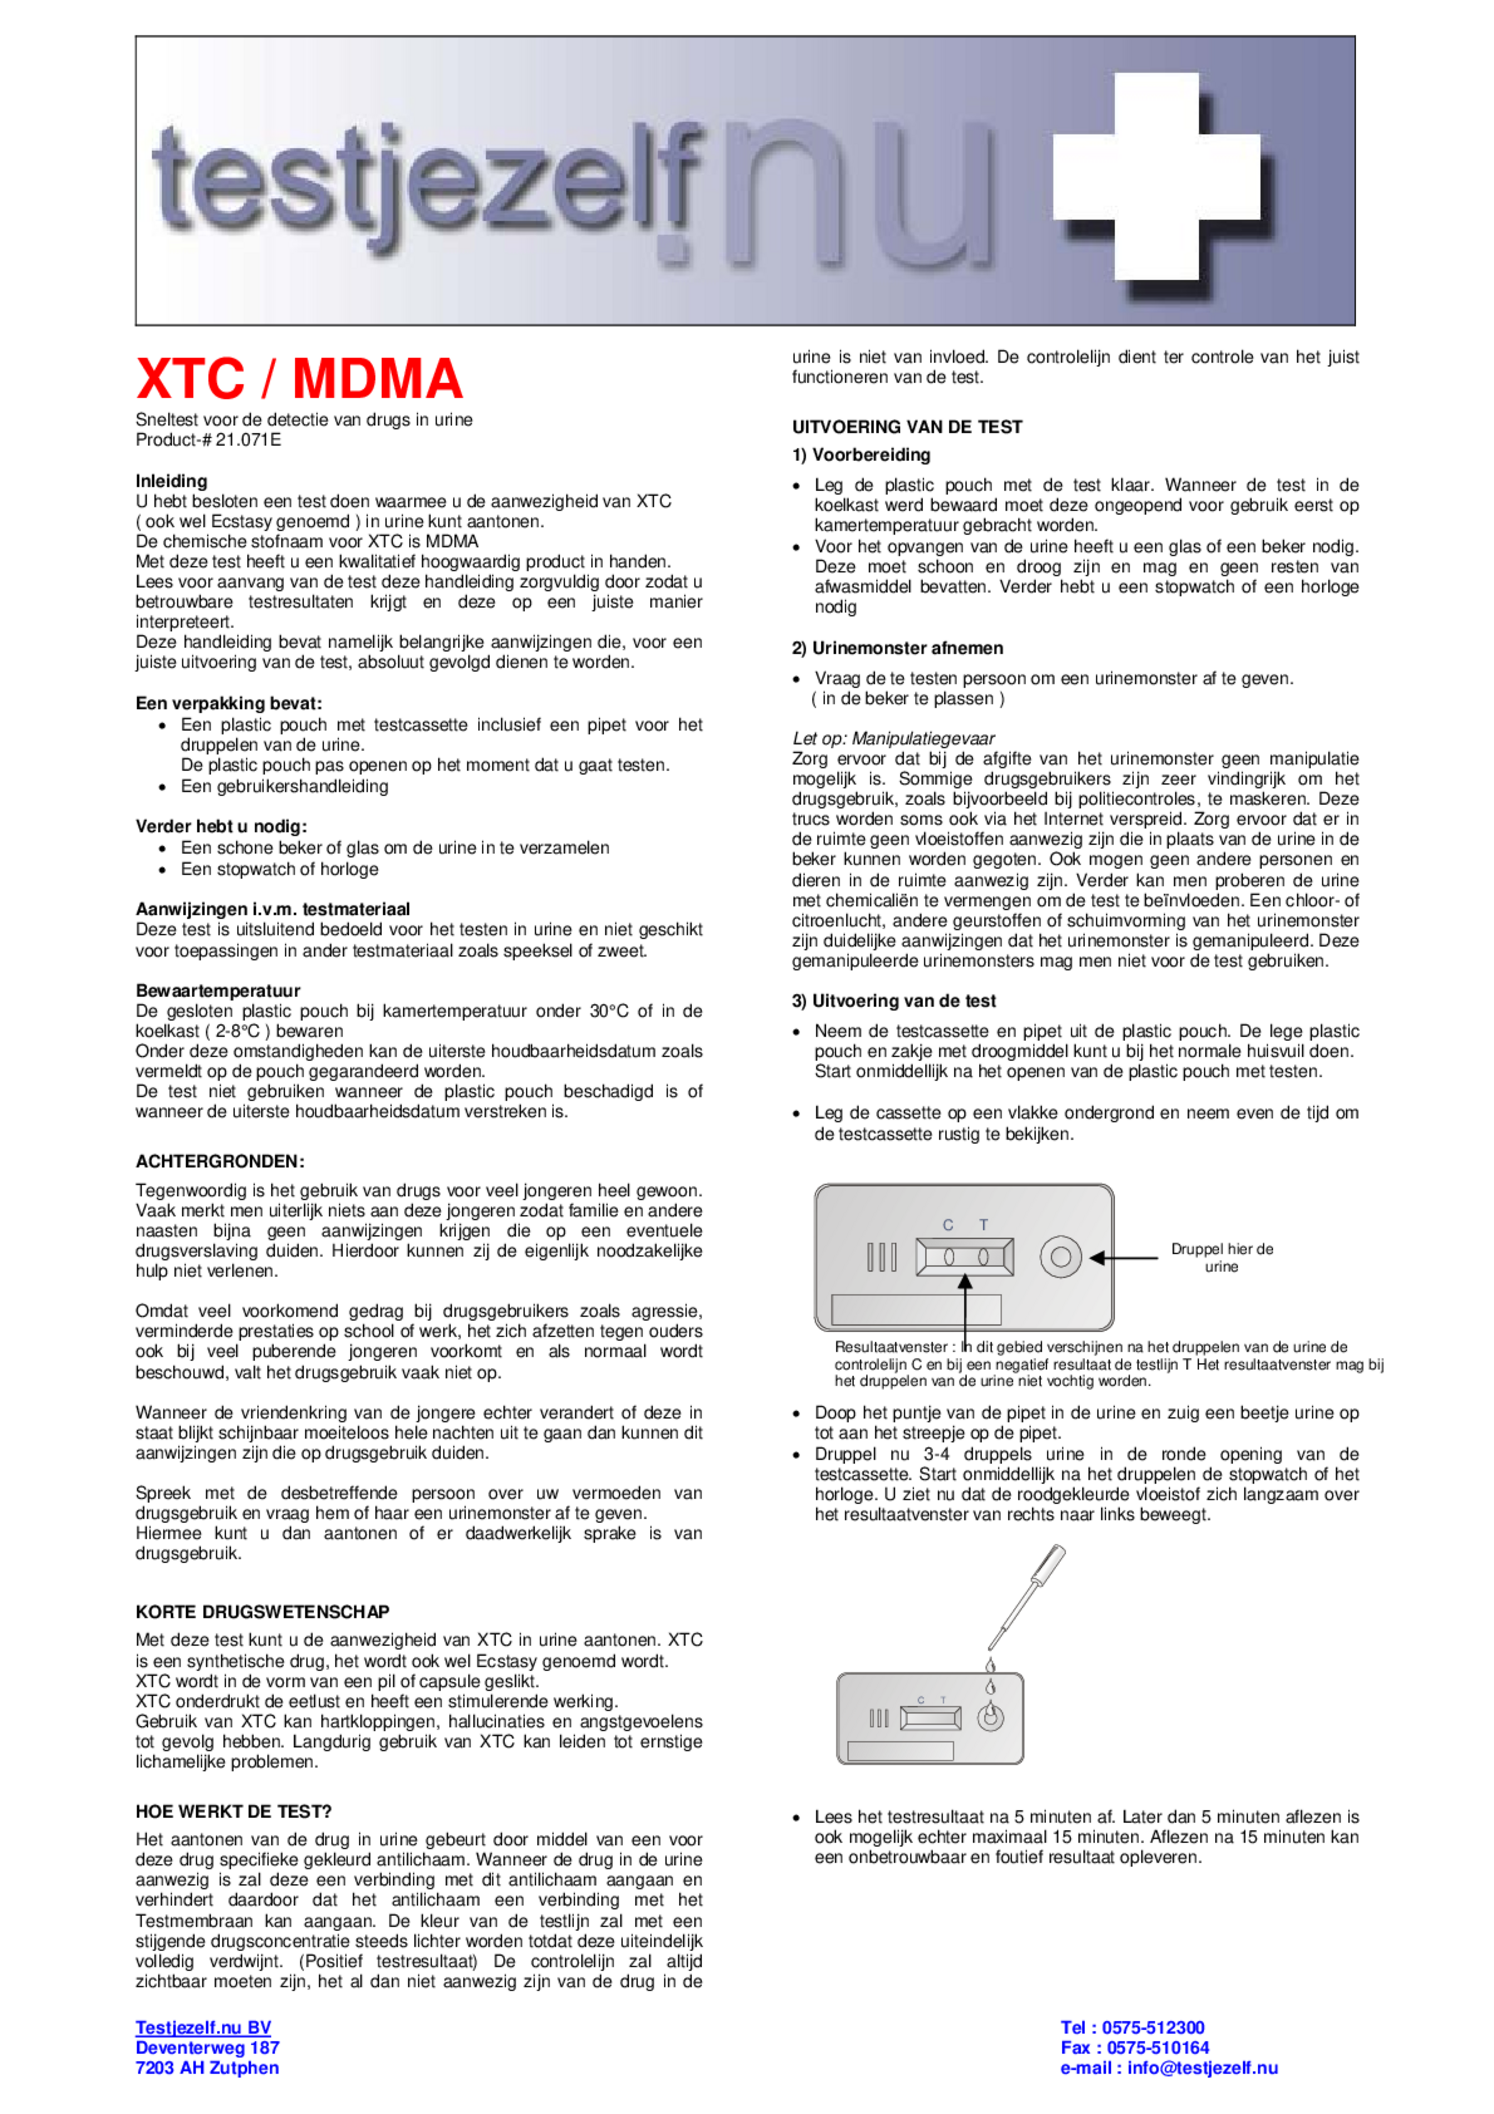 Drugstest MDMA XTC afbeelding van document #1, gebruiksaanwijzing